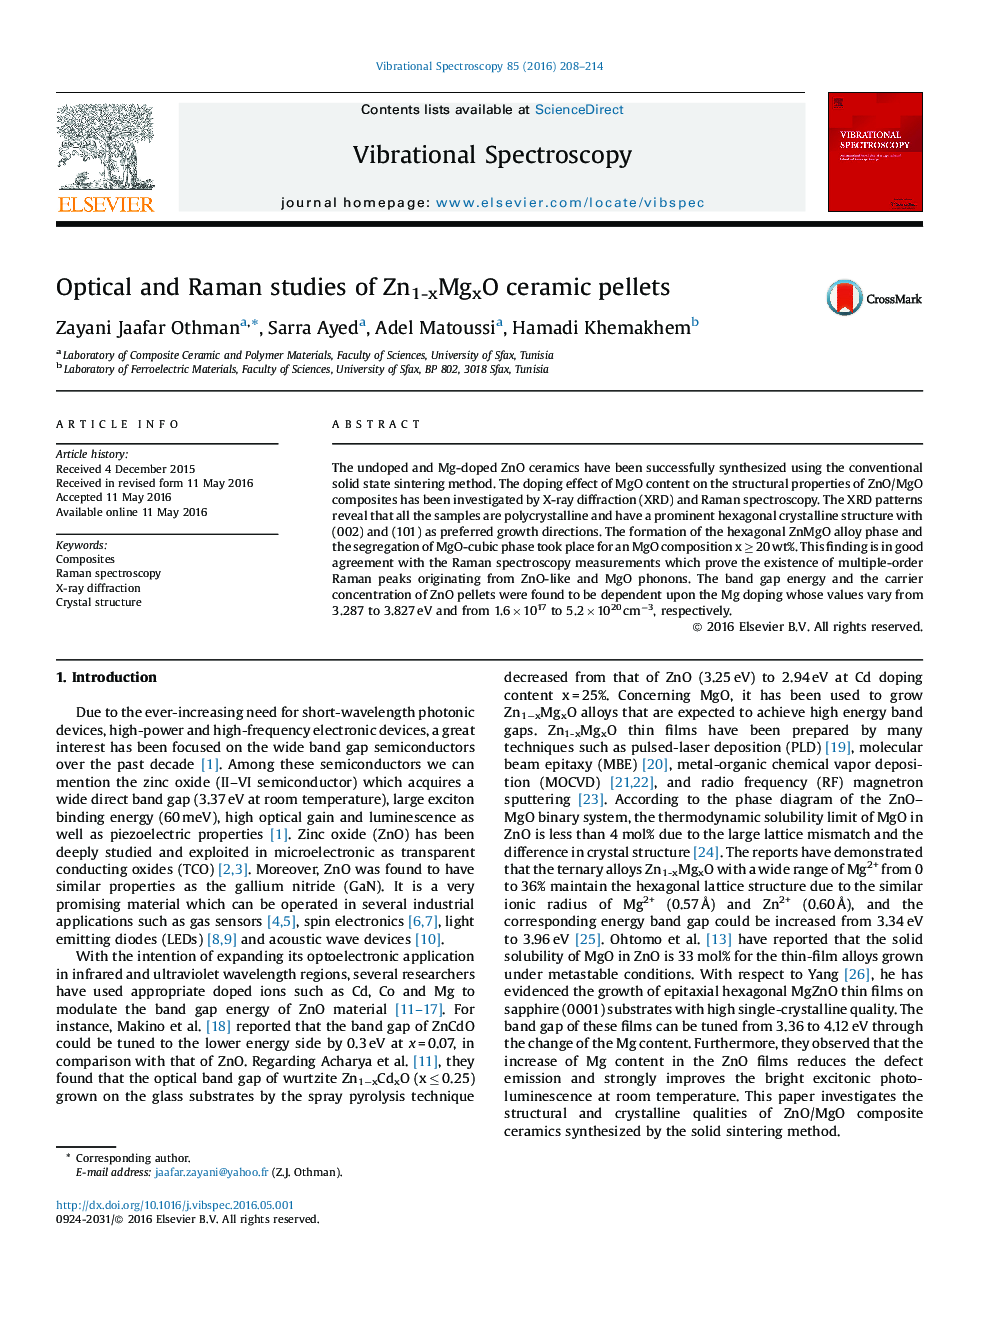 Optical and Raman studies of Zn1-xMgxO ceramic pellets